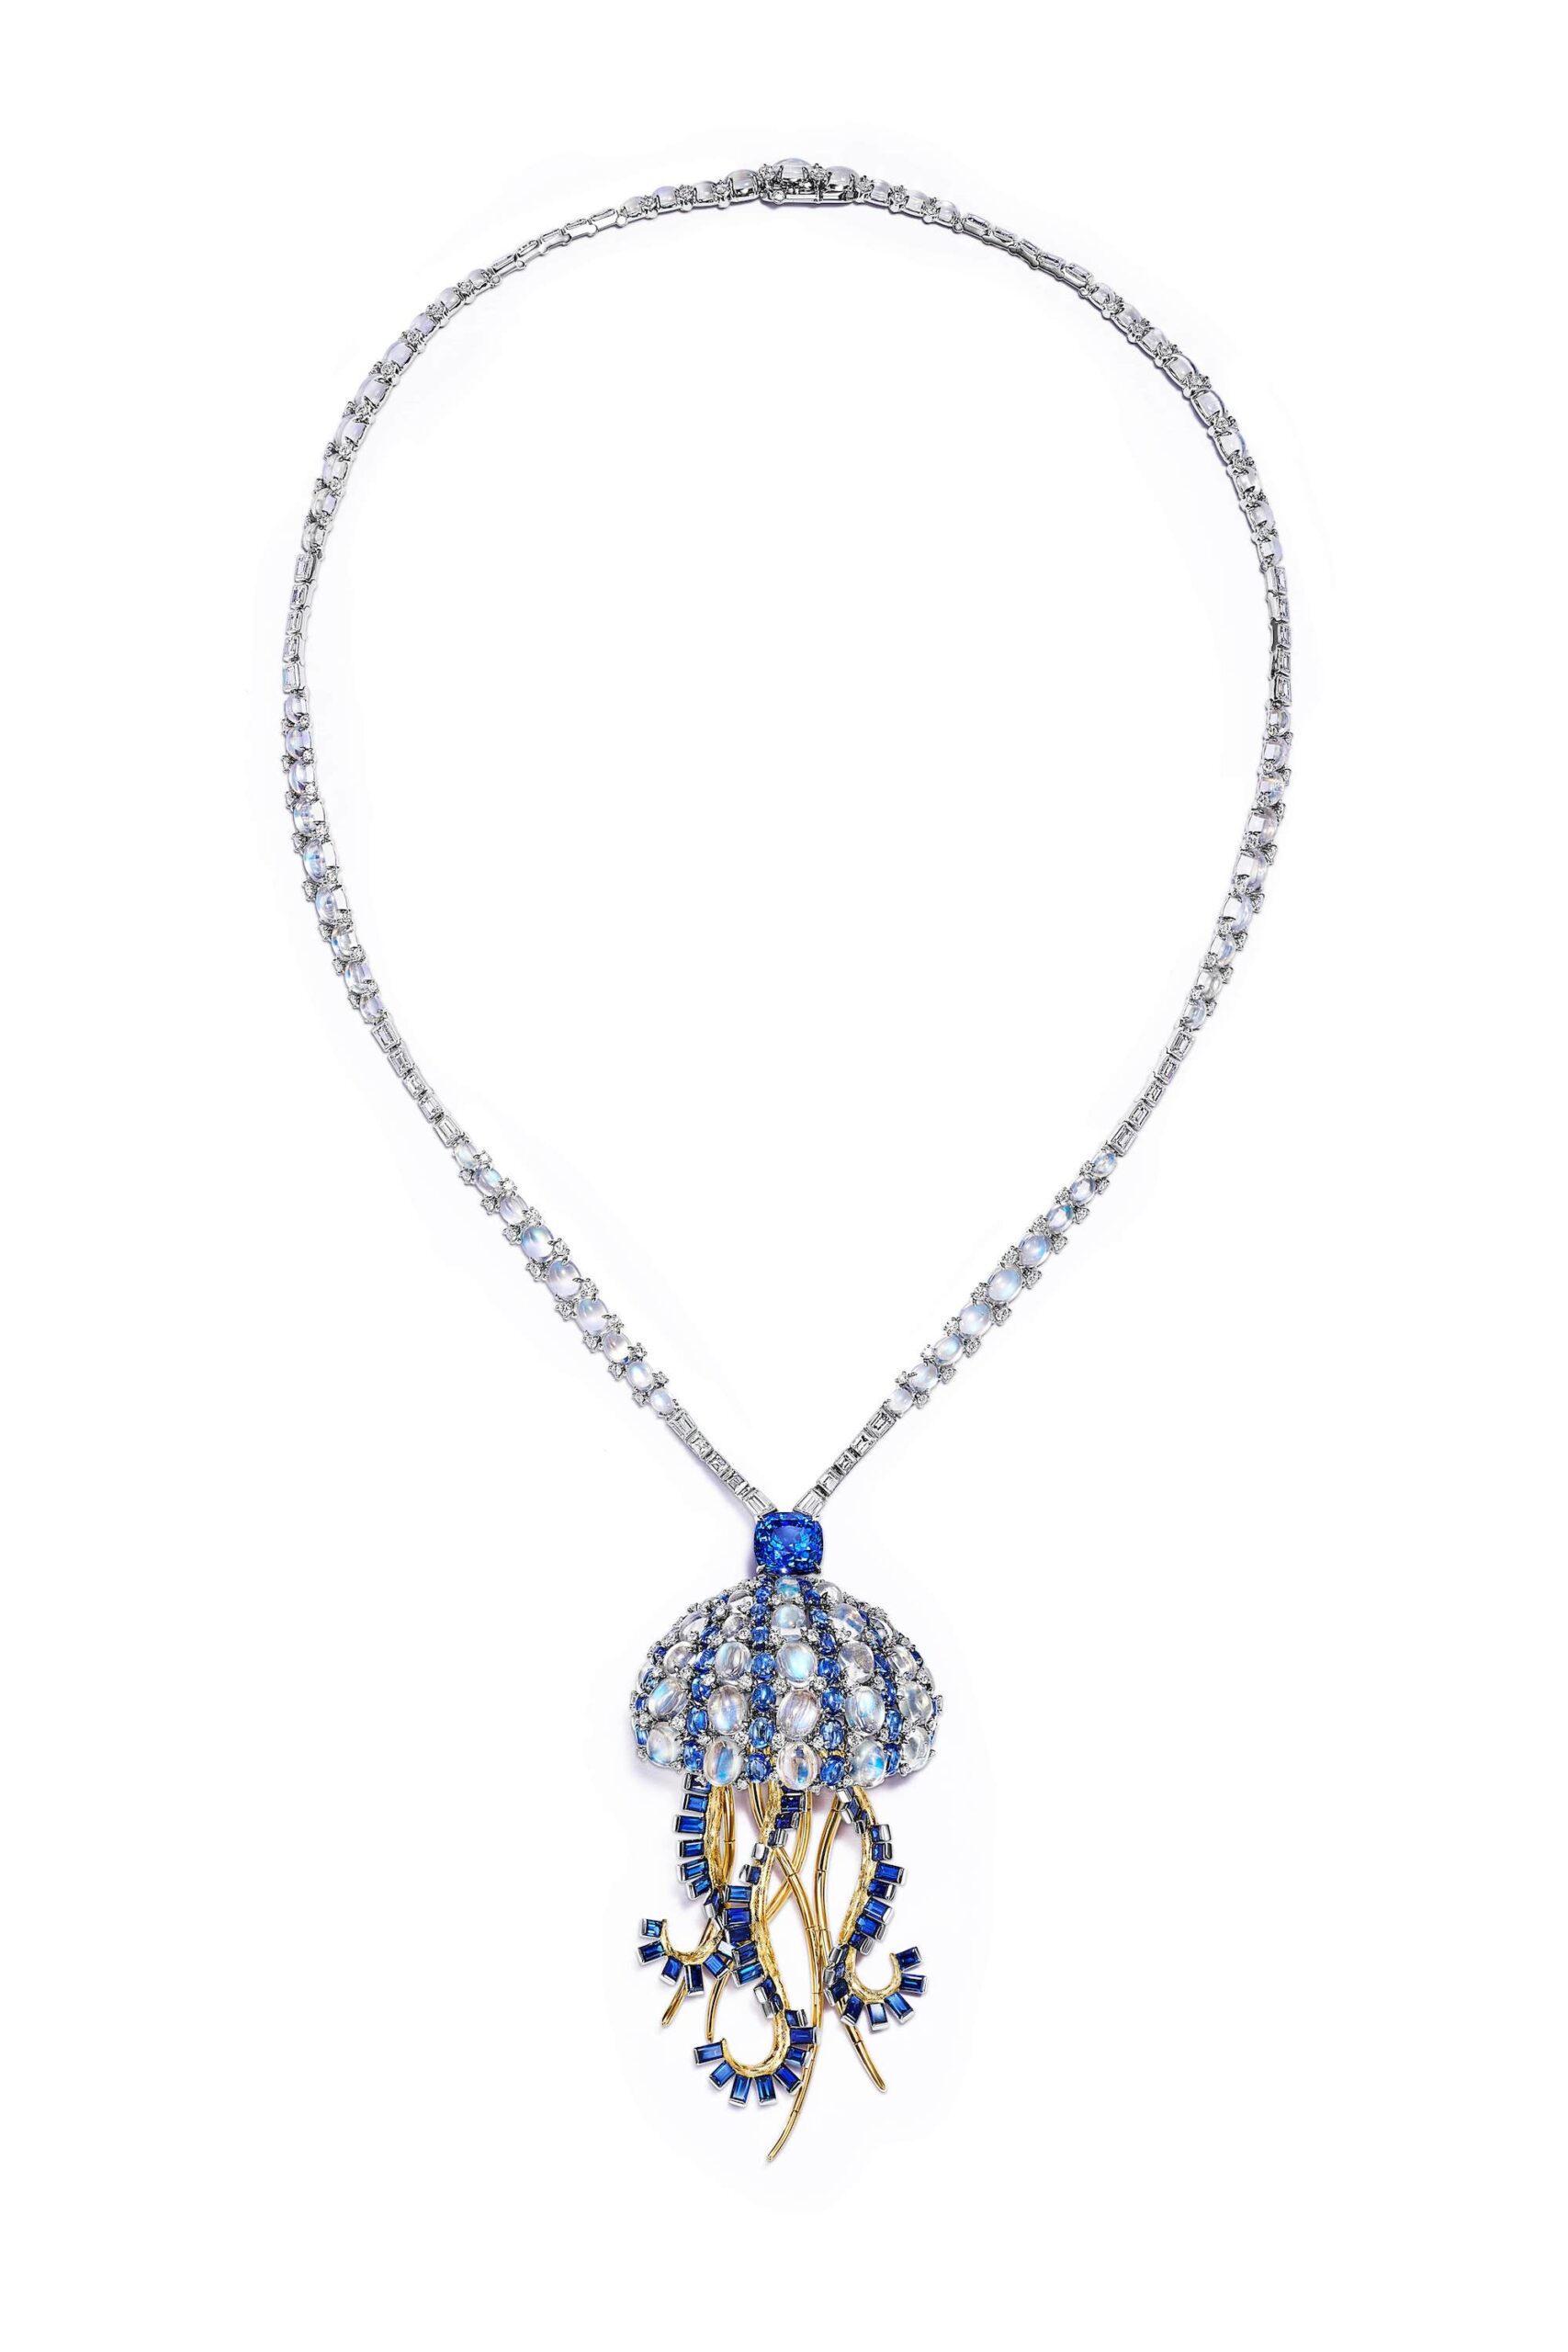 Tiffany & Co. High Jewelry